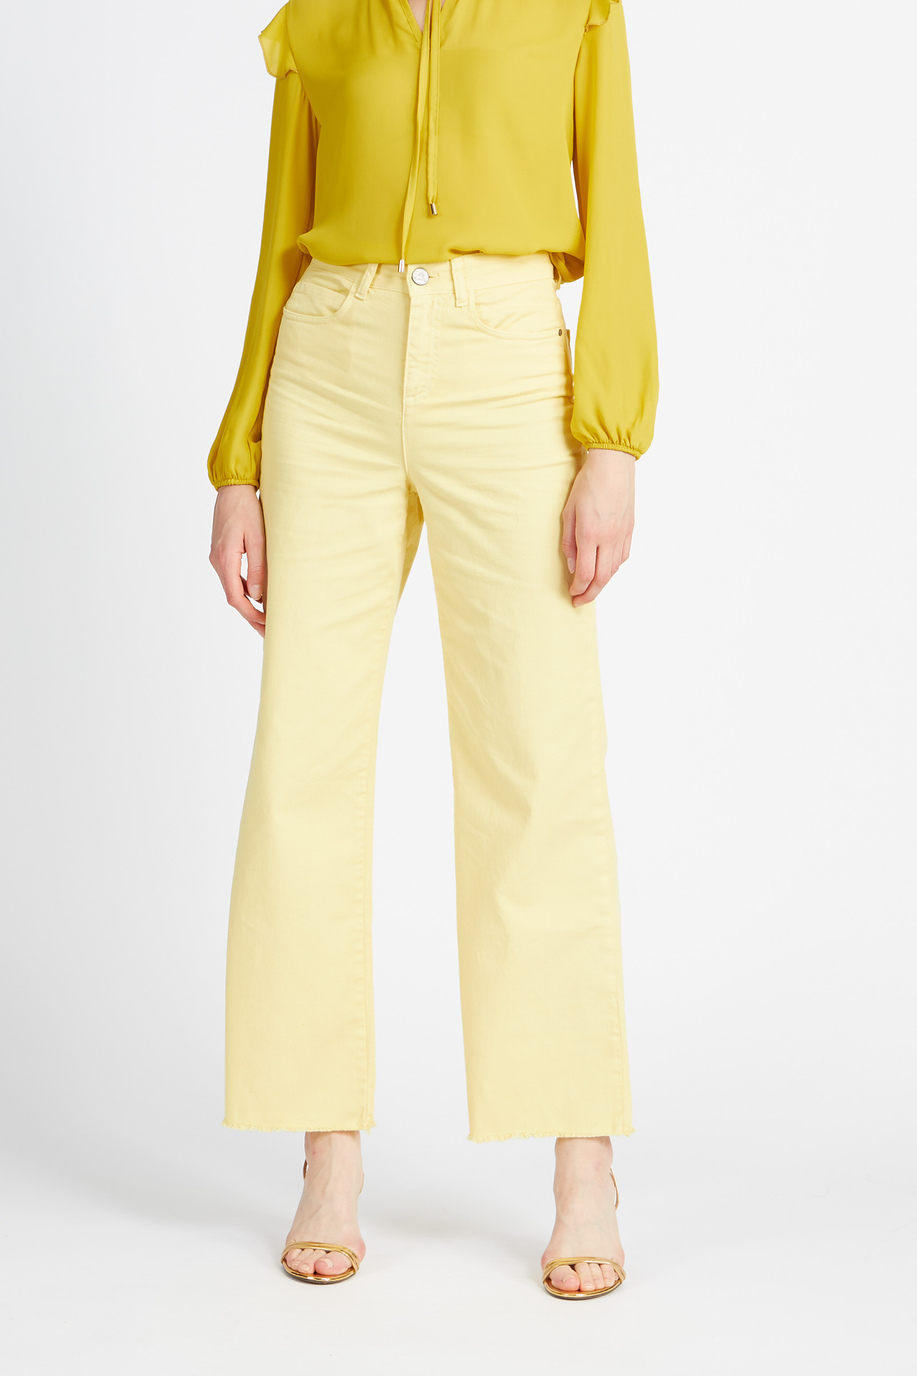 Pantalone jeans donna 5 tasche in tinta unita Spring Weekend - Villard - Pantaloni | La Martina - Official Online Shop